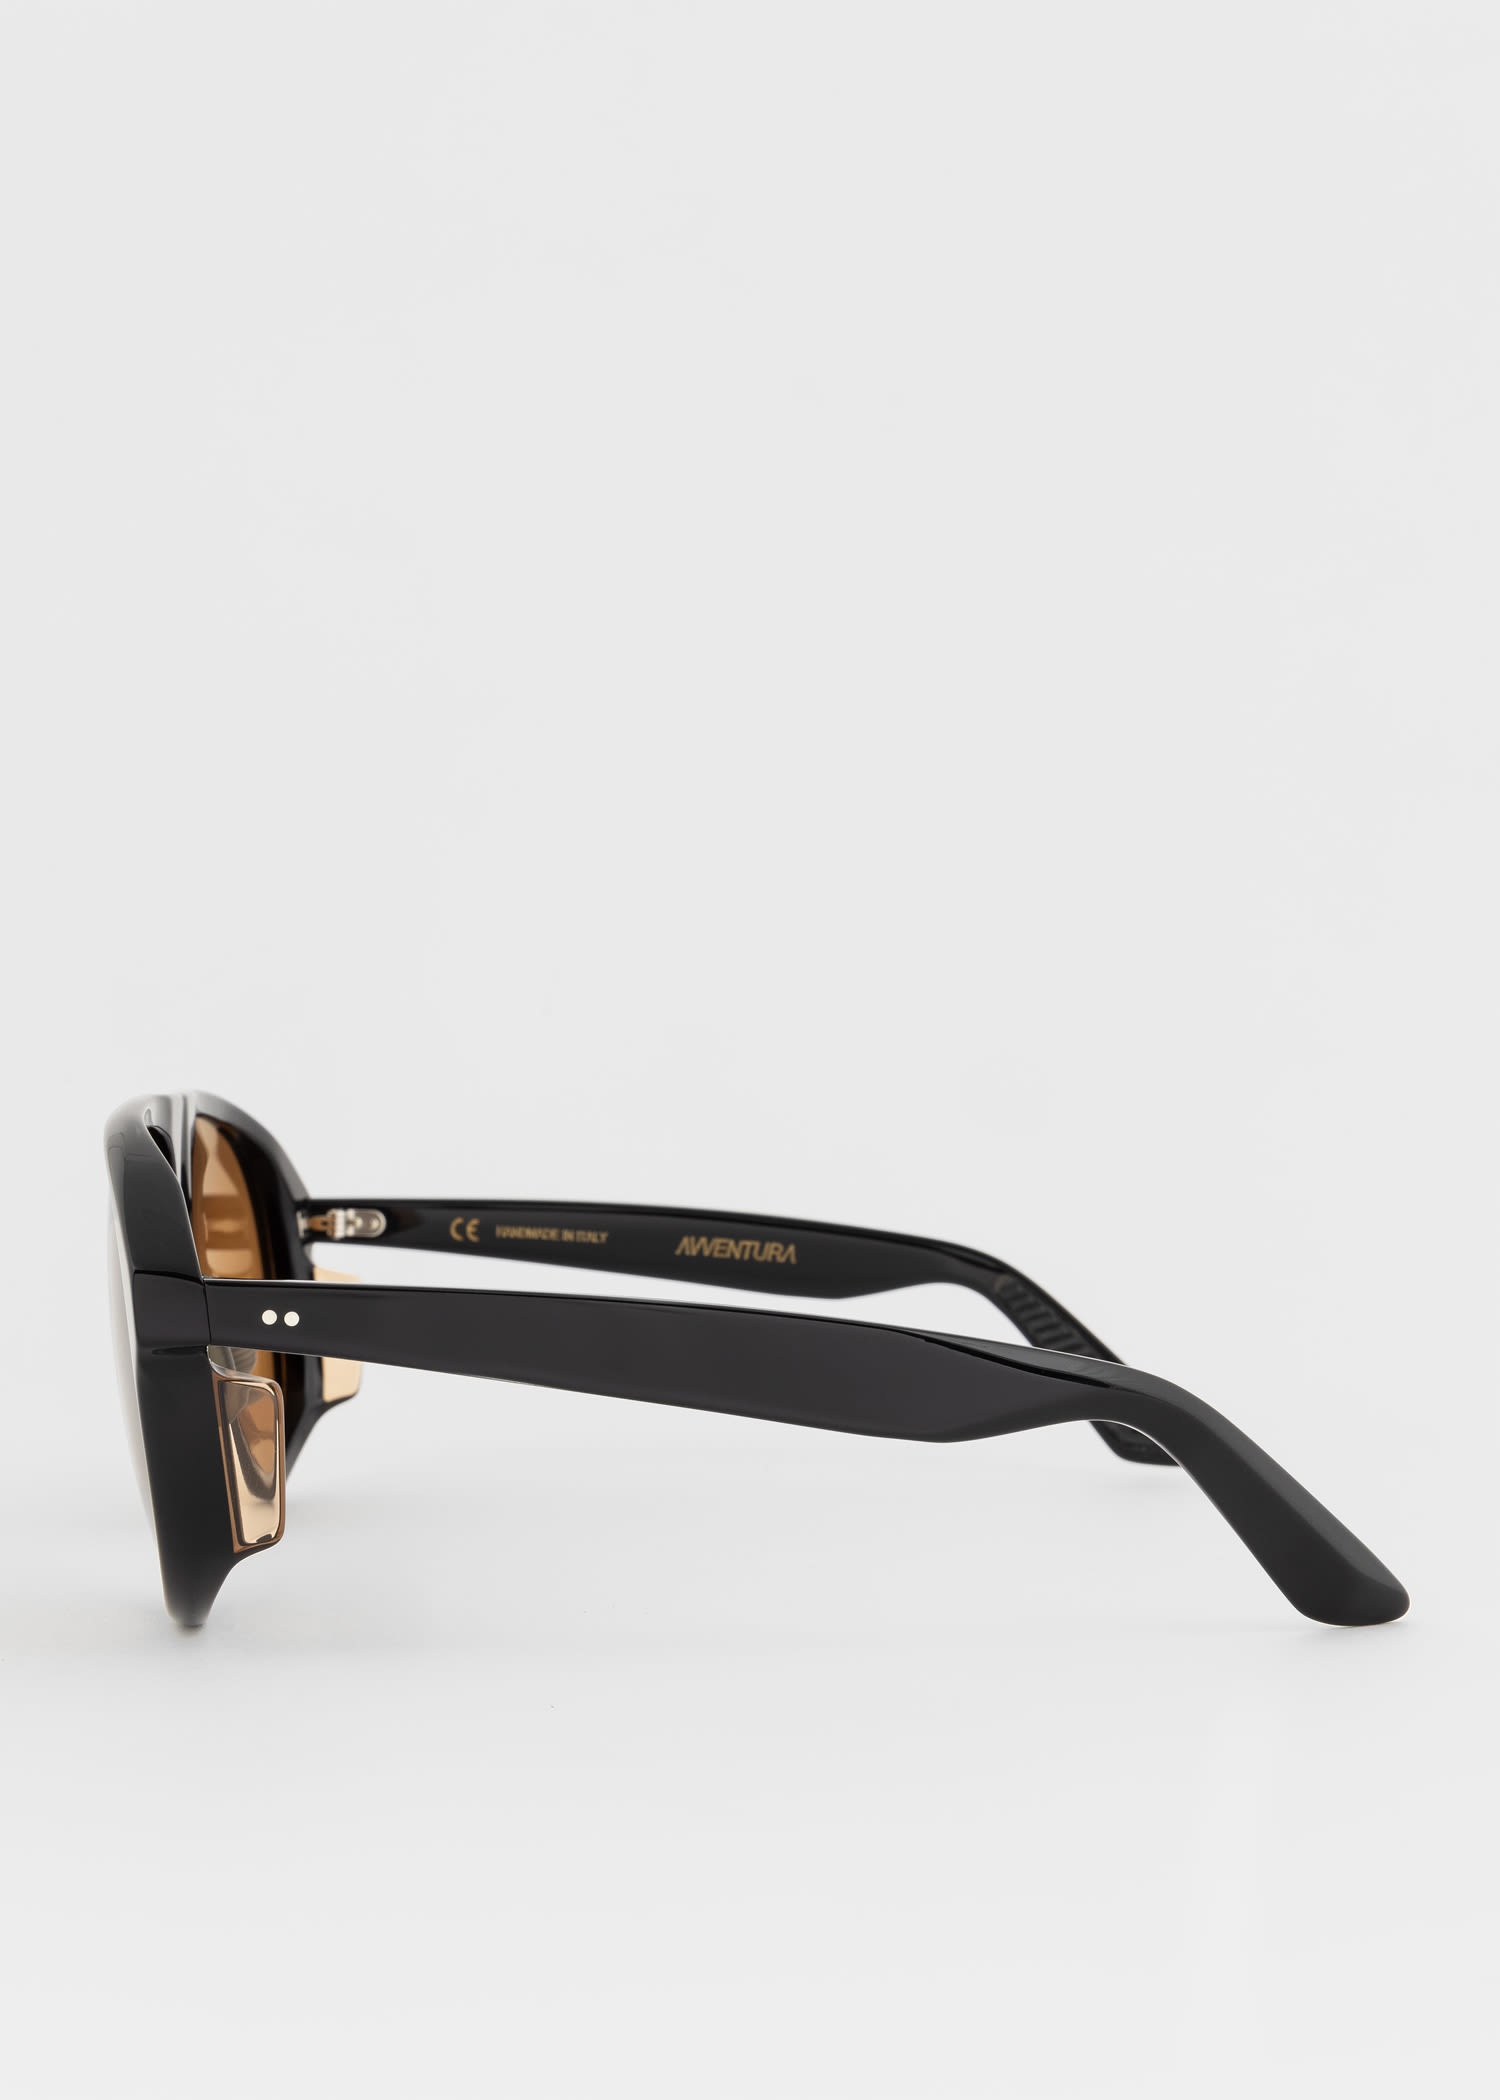 'Stelvio Noir' Sunglasses by Avventura - 3